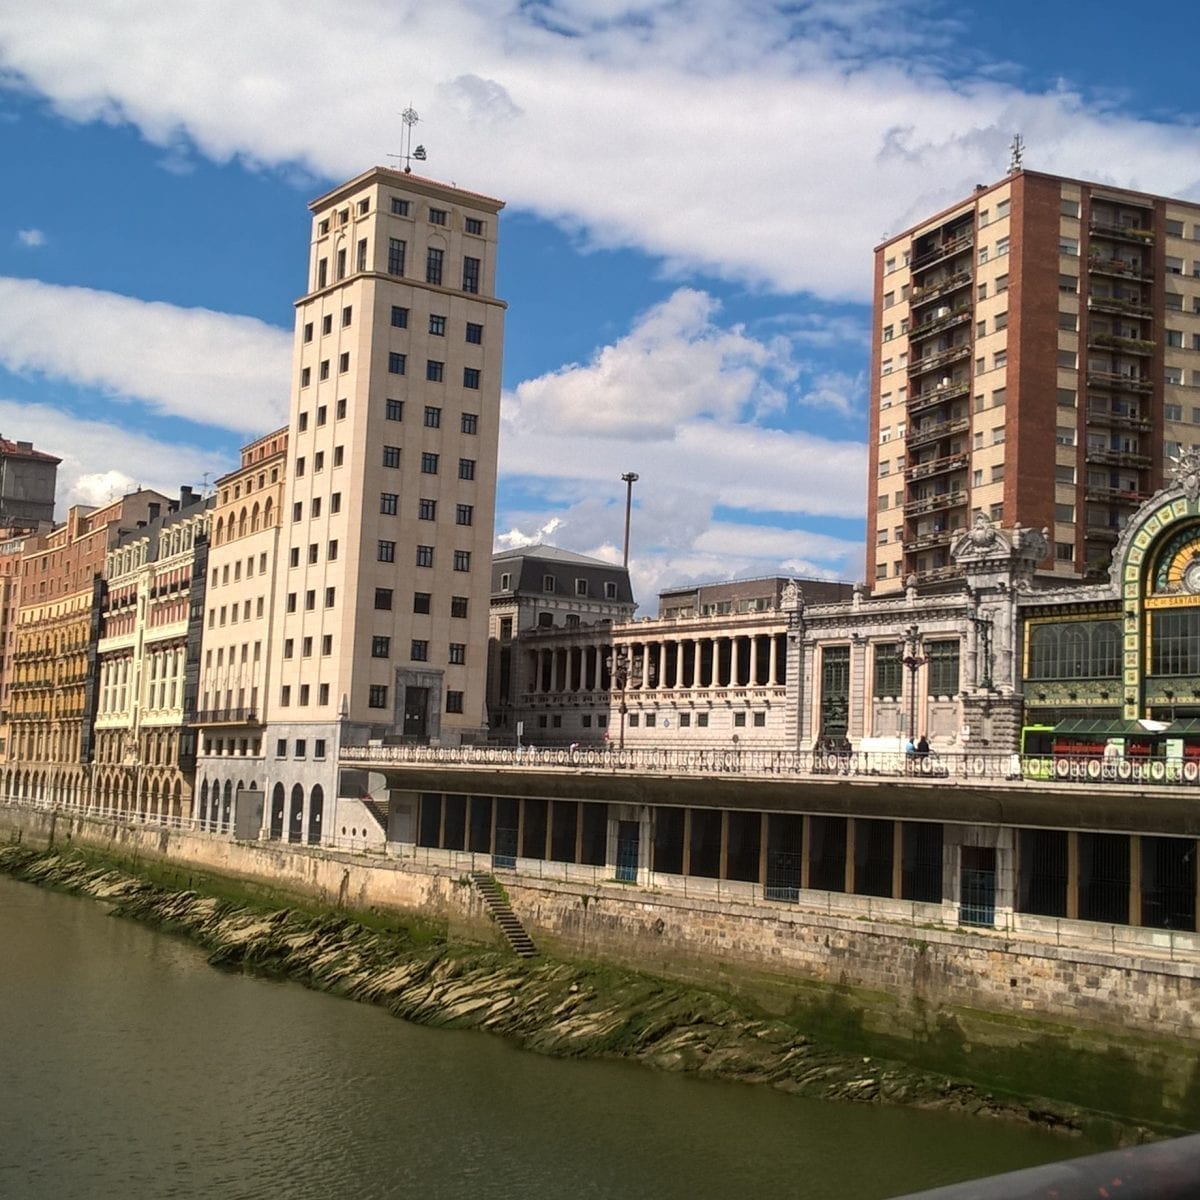 Bilbao Classic and Modern